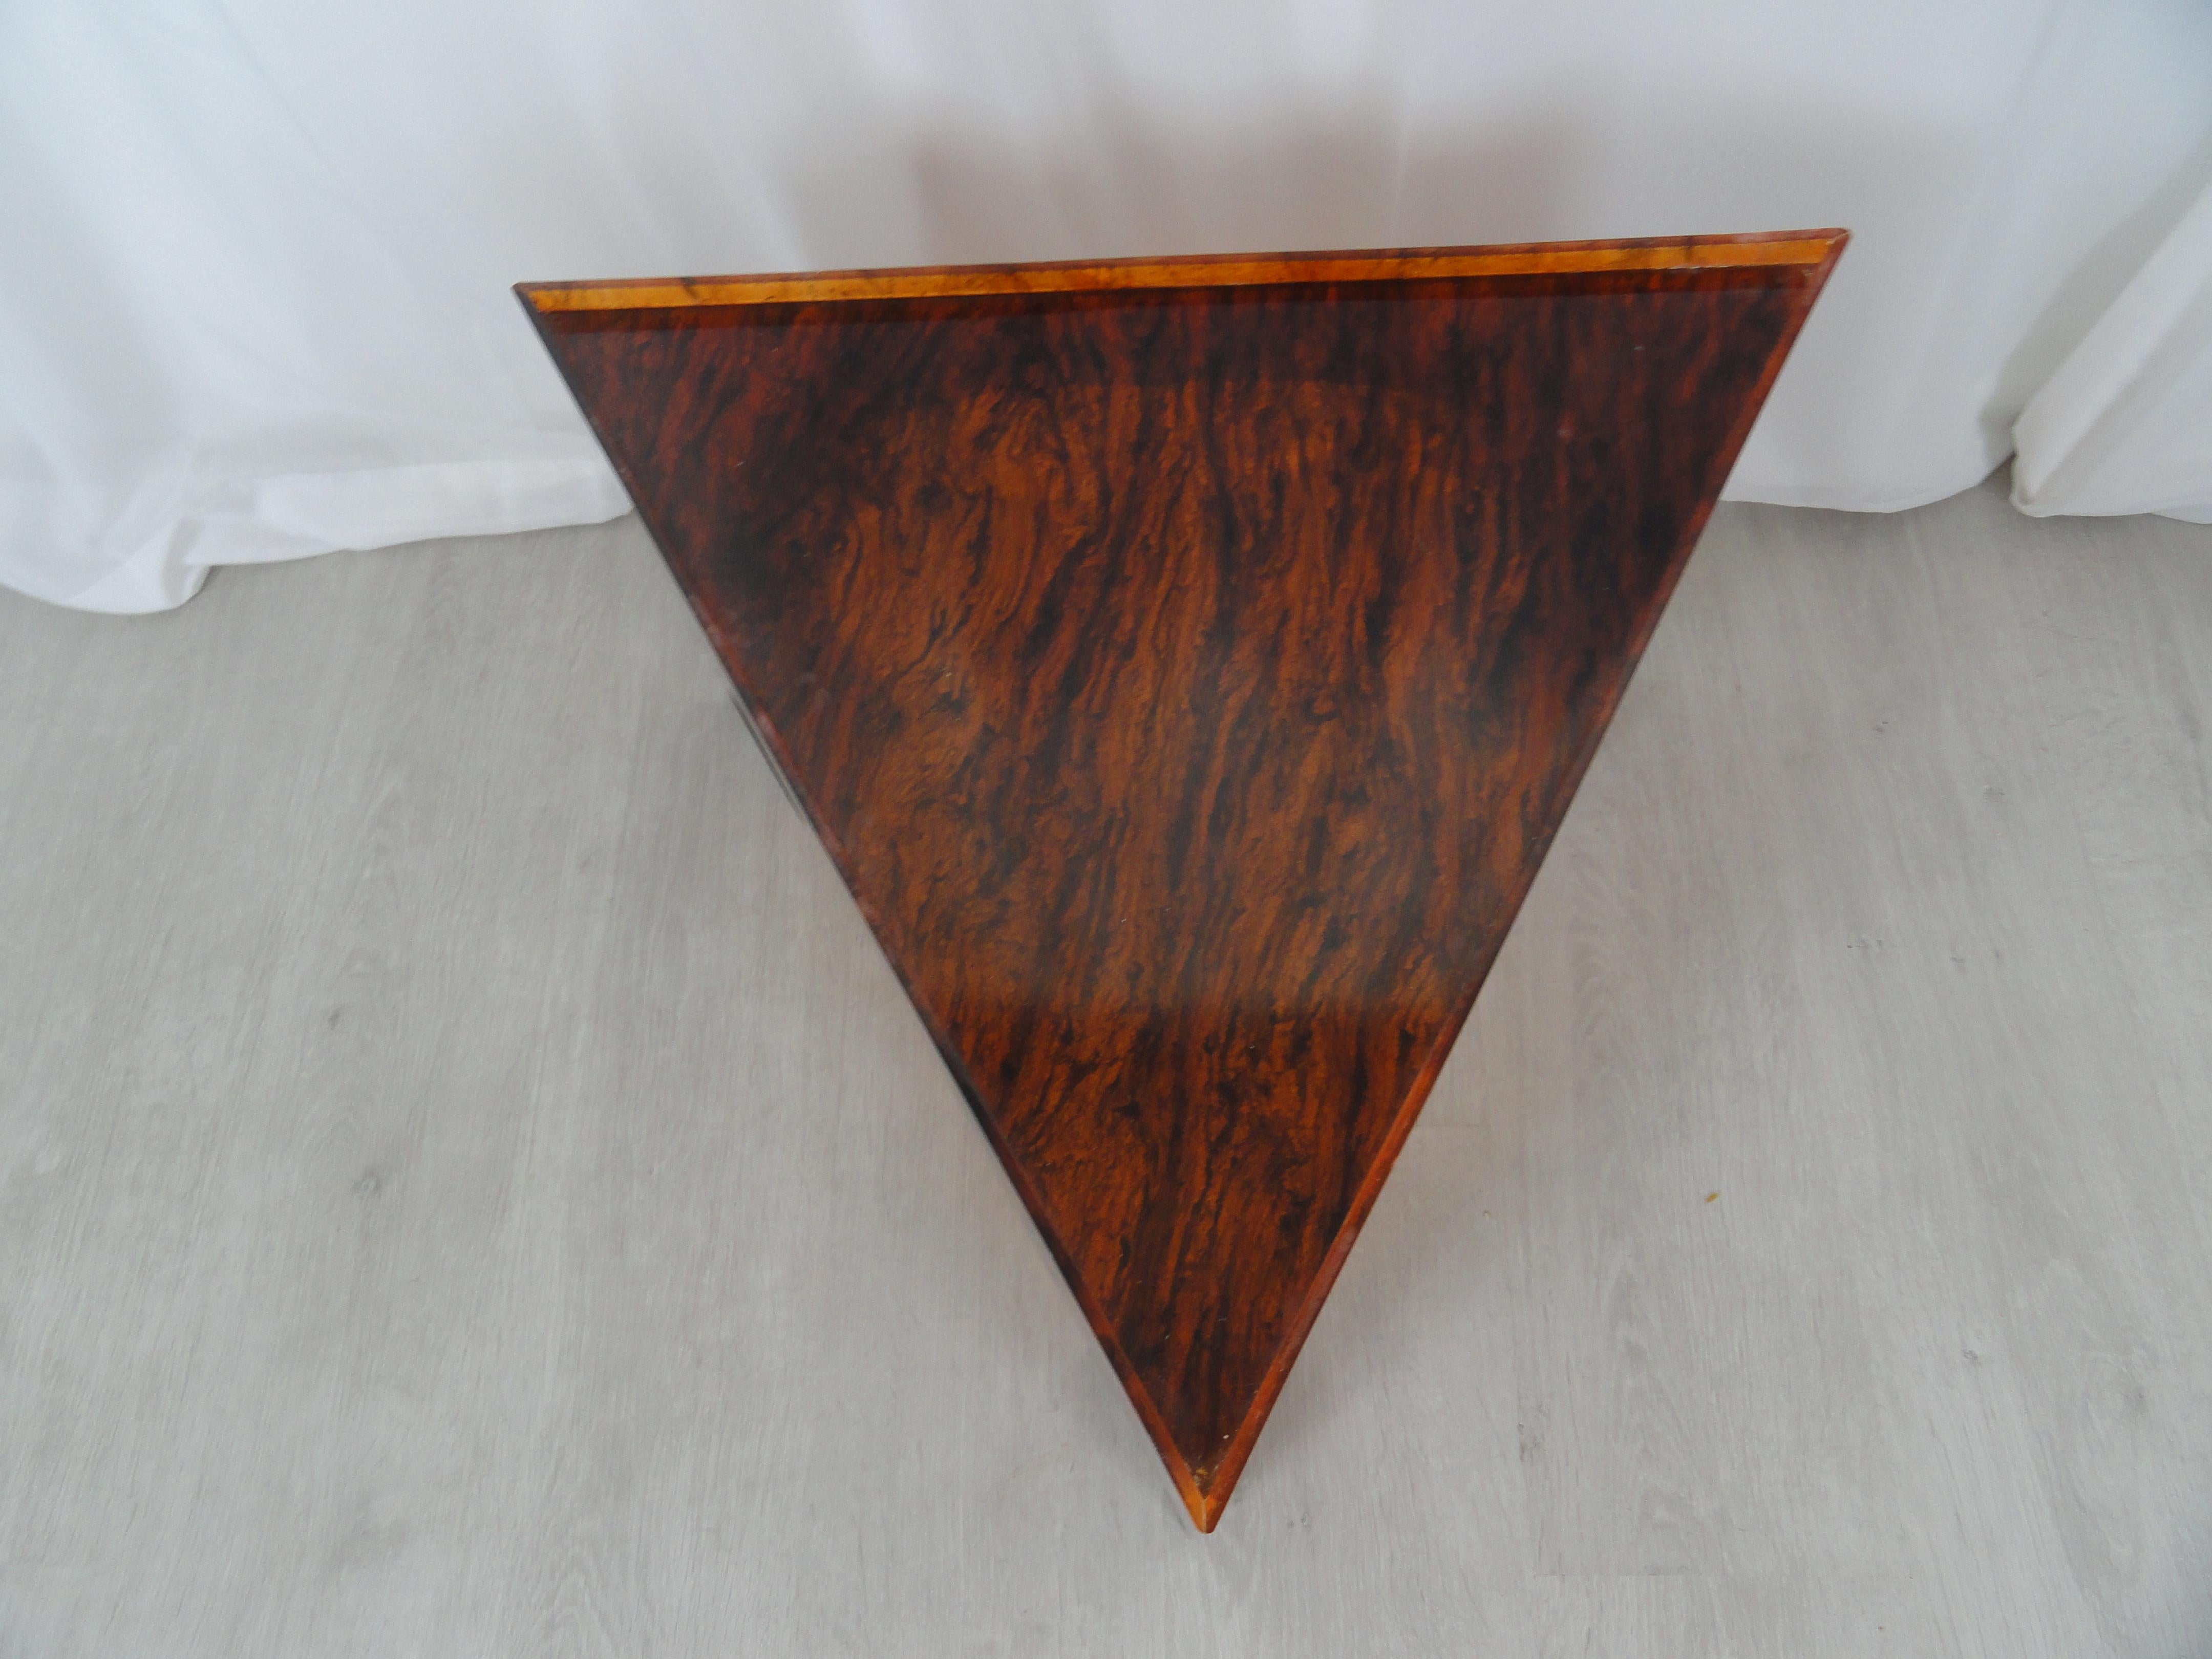 Faux tortoiseshell acrylic triangle table. Measures 15